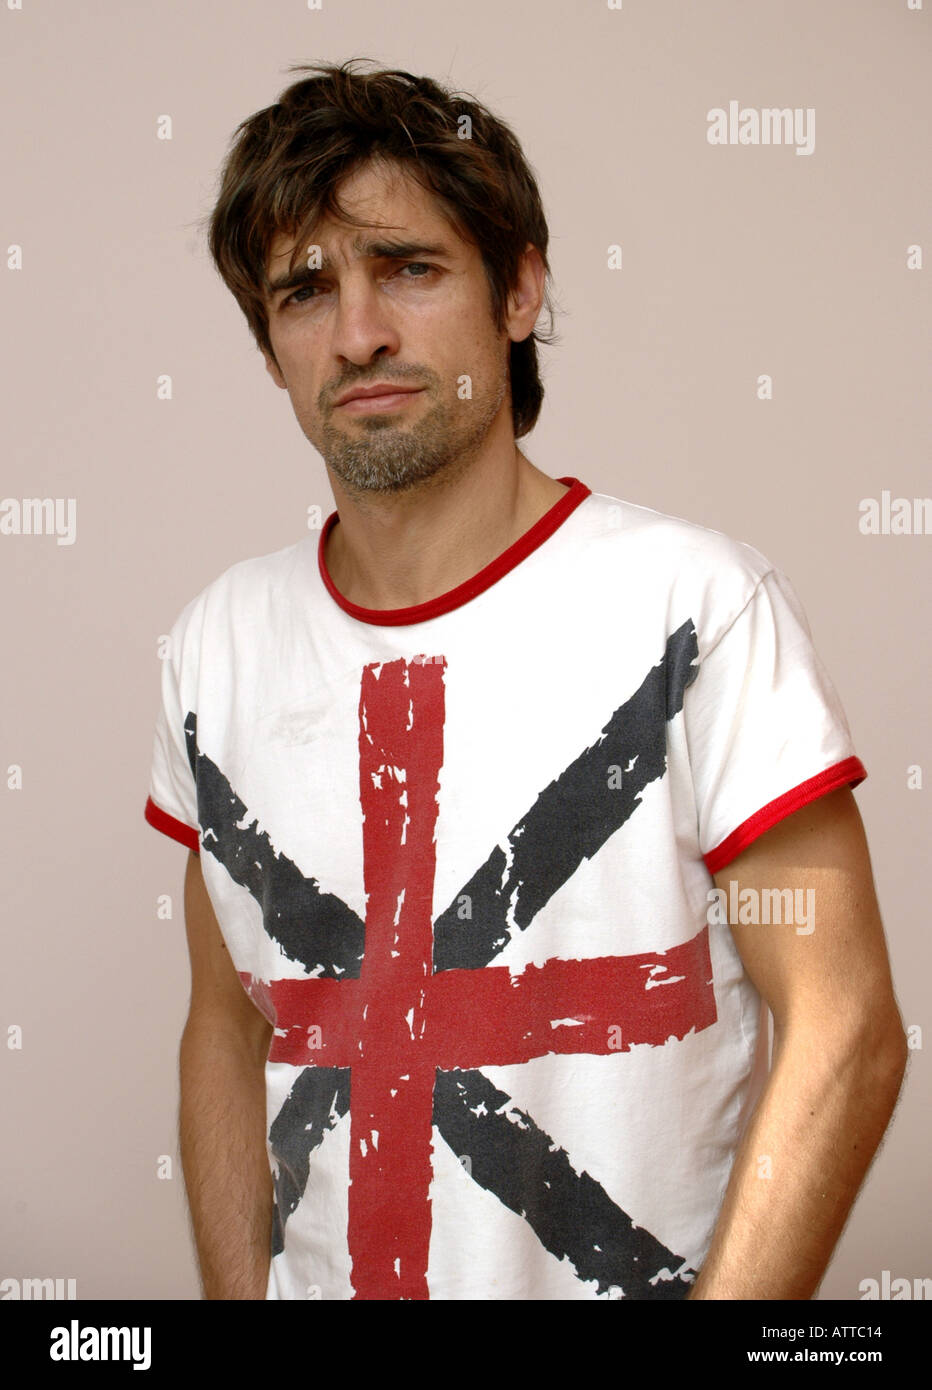 MR Junger Mann mit England Shirt MR young man with England shirt Bildagentur online Begsteiger Stock Photo